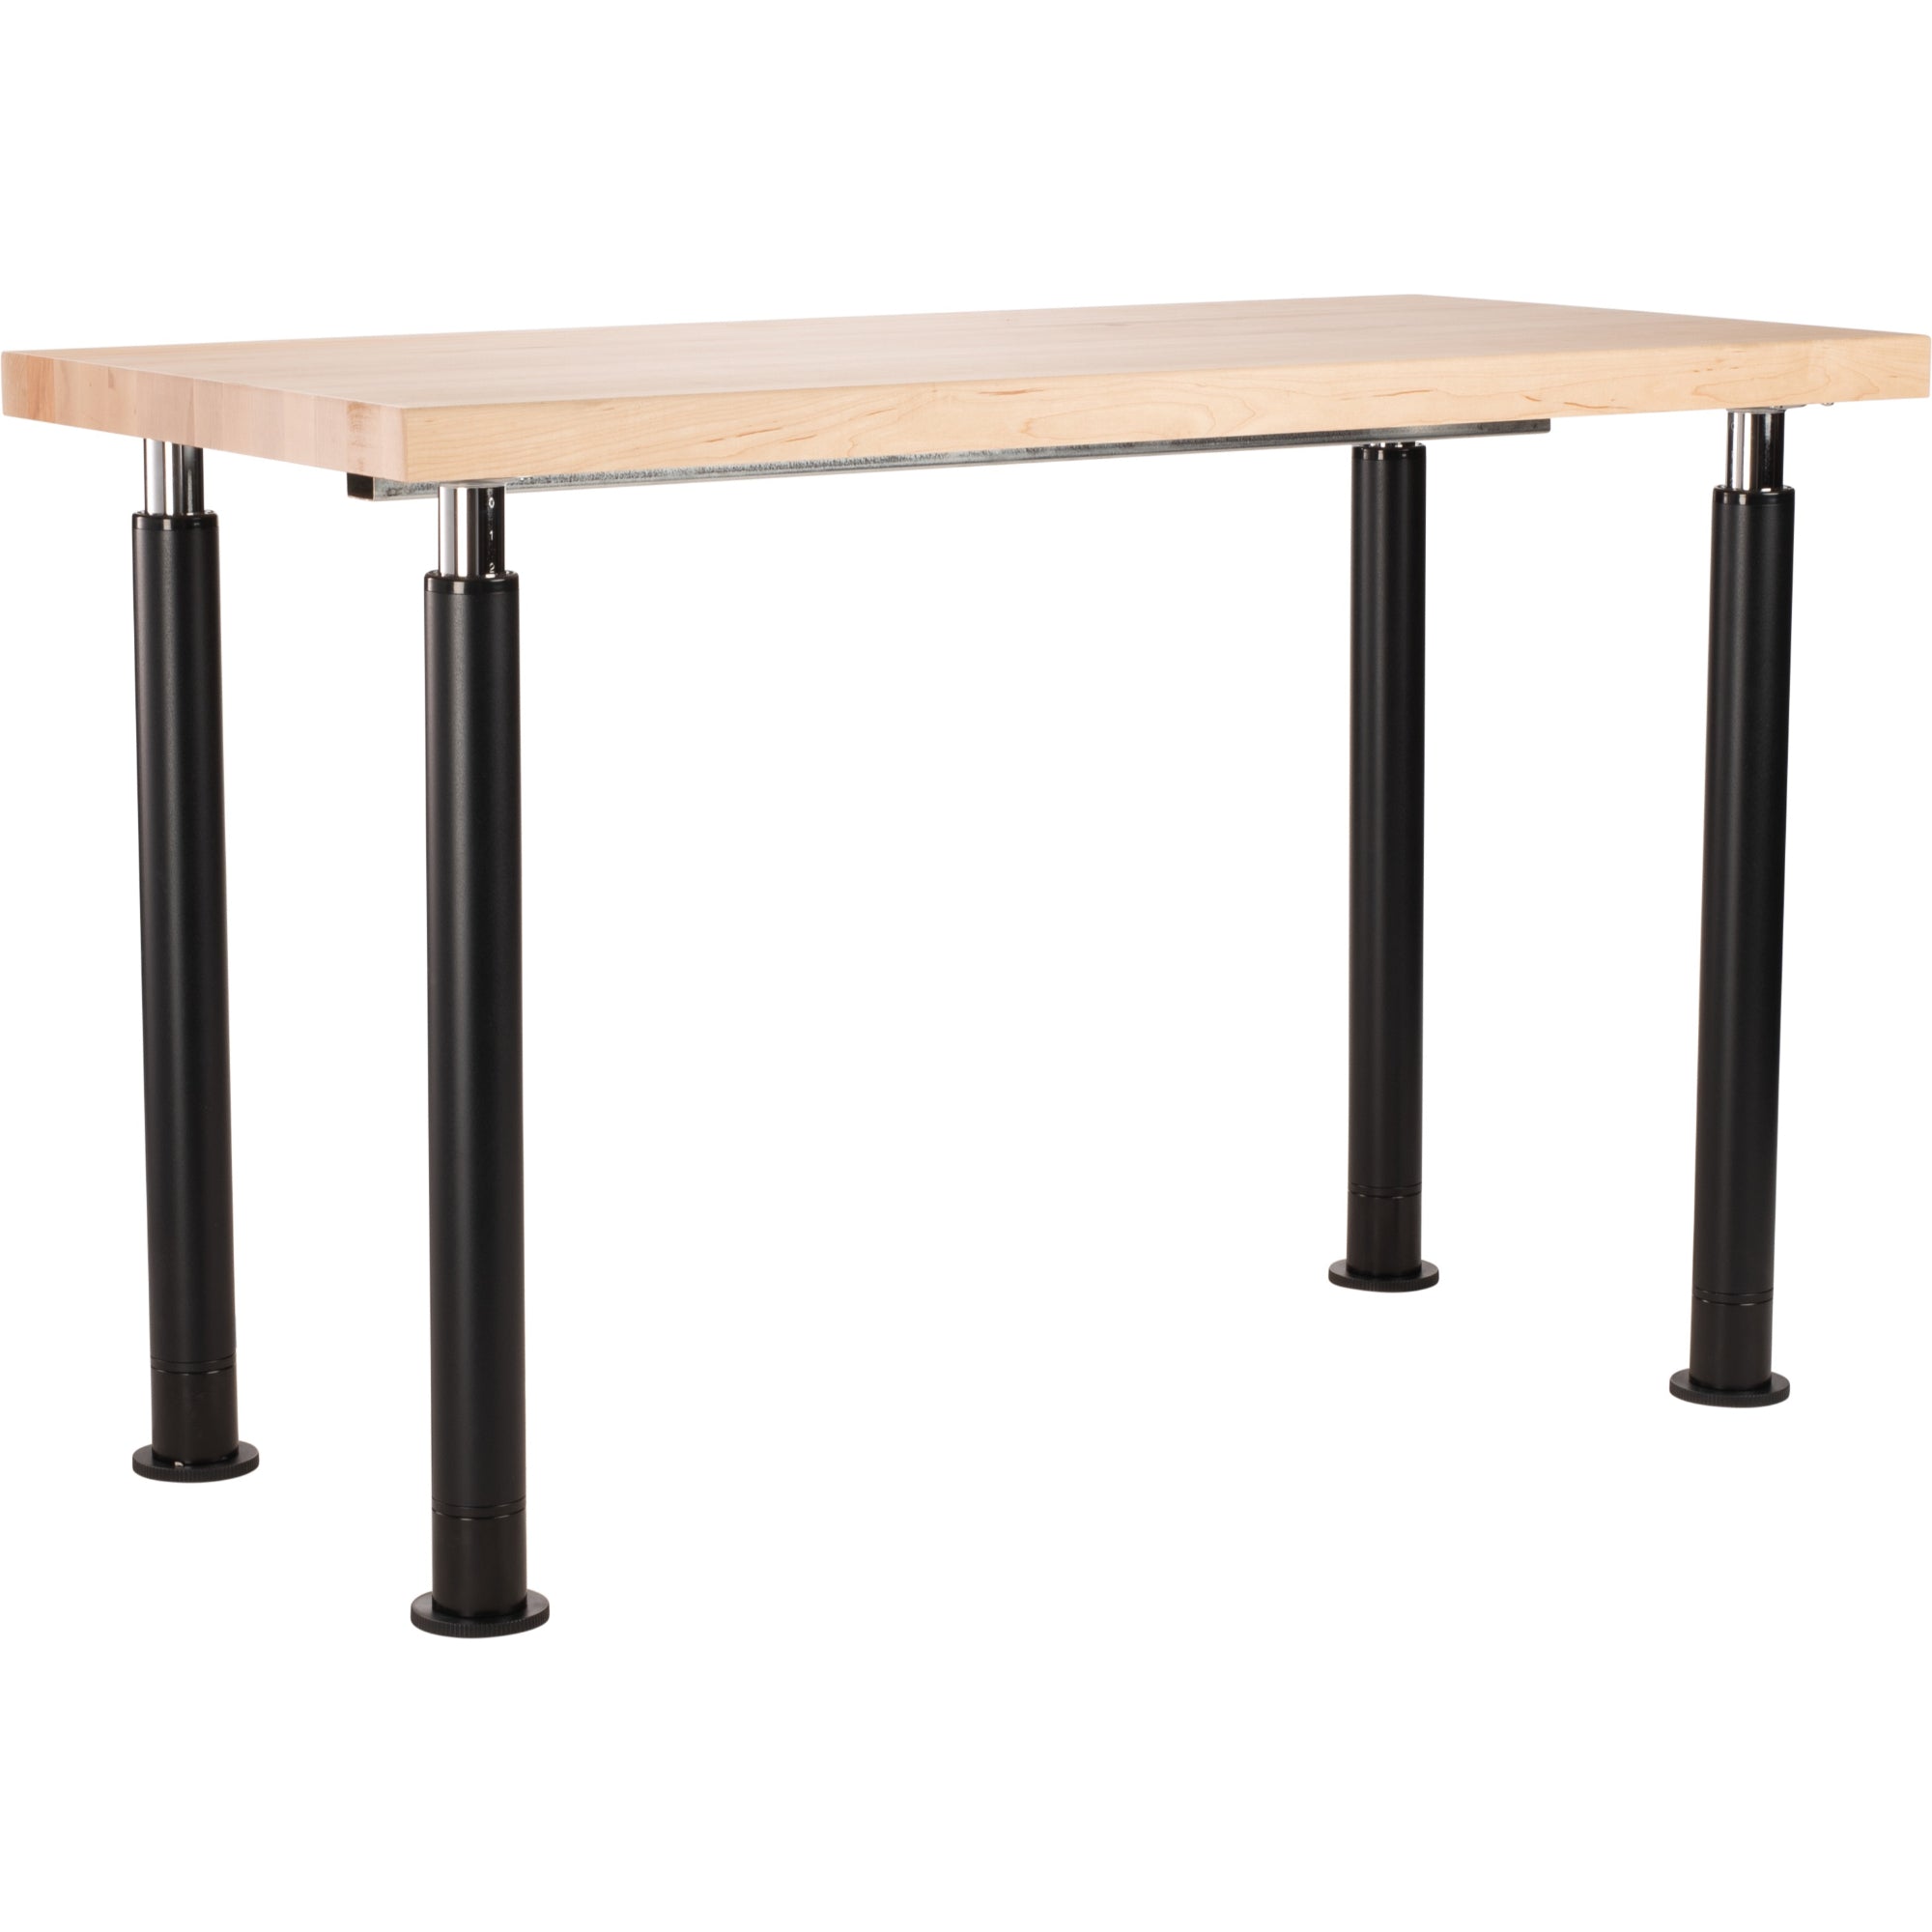 Designer Series Adjustable Height Science Table, 24" x 60" x 27"-42" H, Butcherblock Top